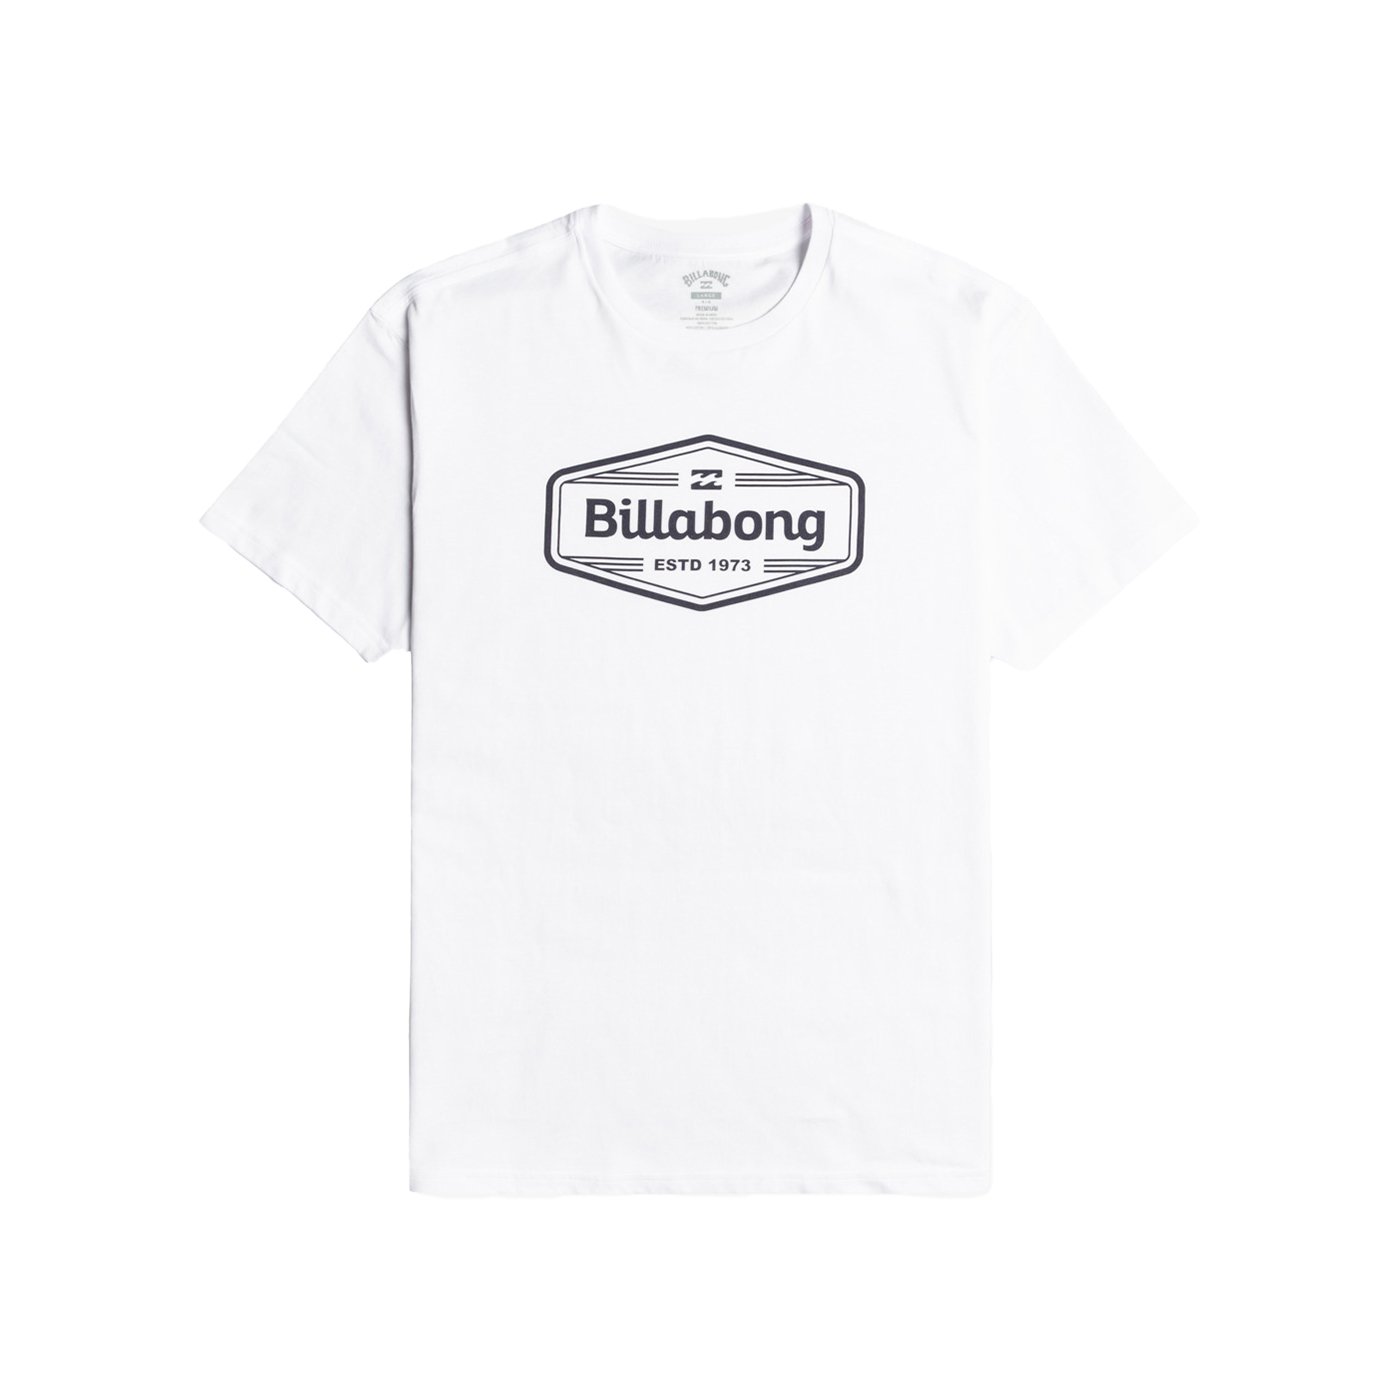 Billabong Trademark Erkek Tişört - Beyaz - 1